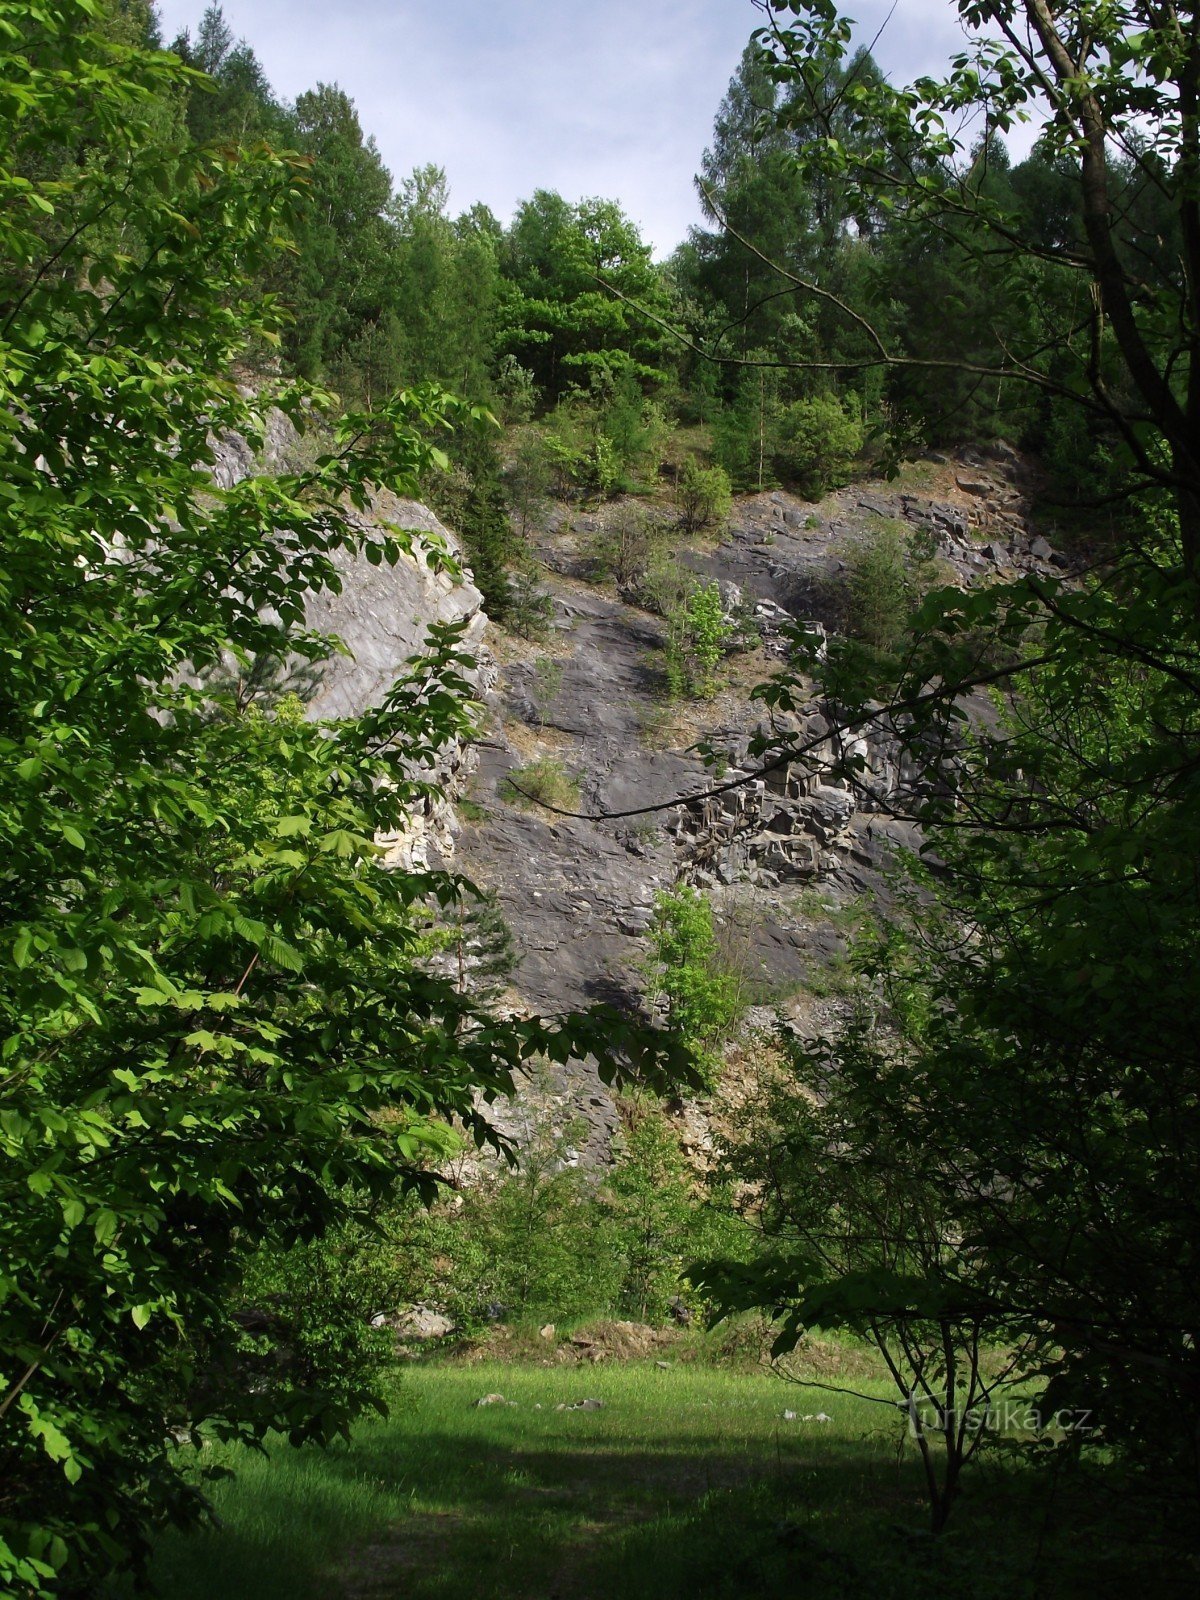 Bohdíkovské skály 2 または石灰岩採石場へのホッケー道路